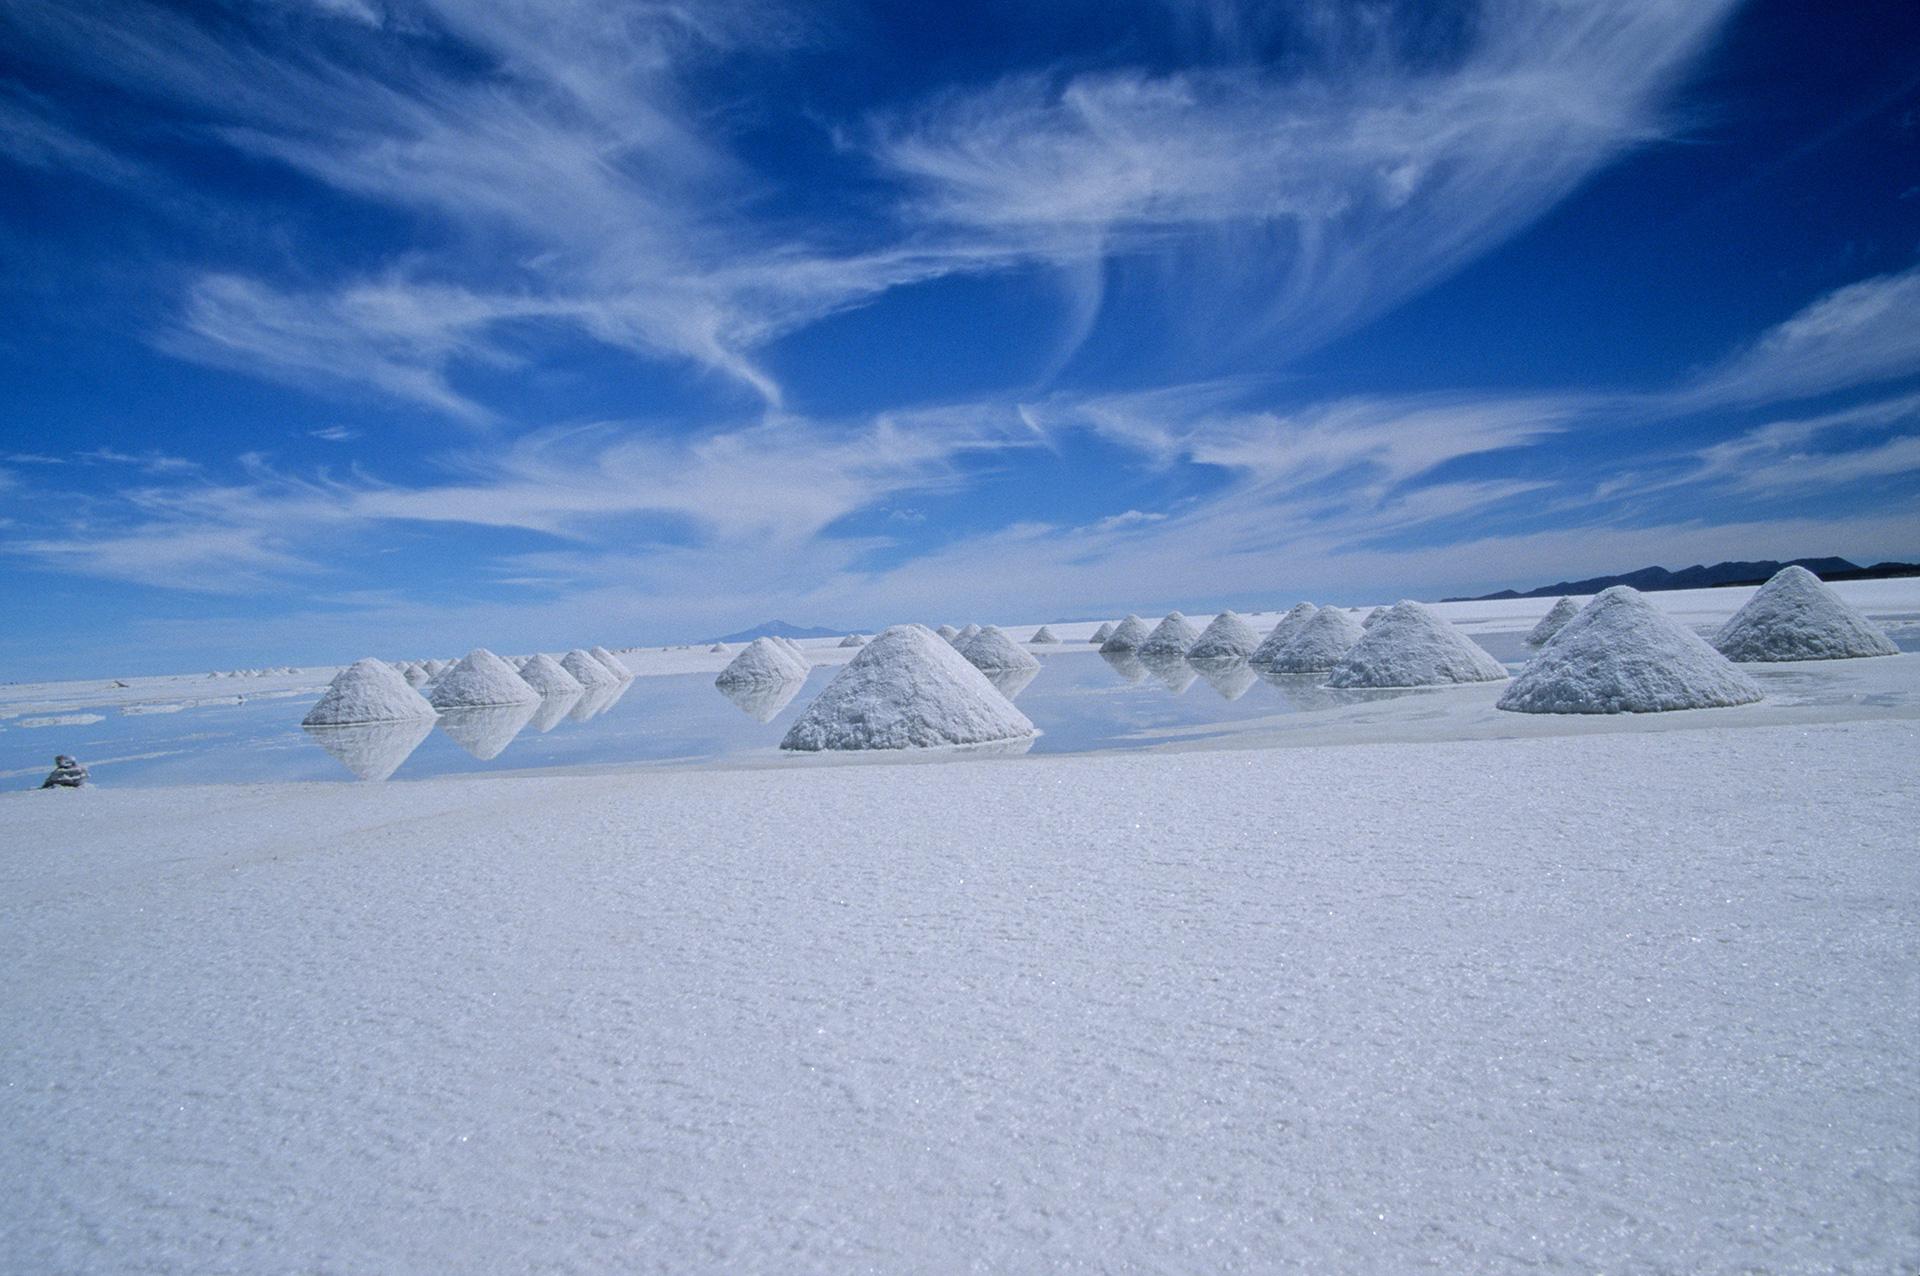 The Uyuni salt flat, Bolivia